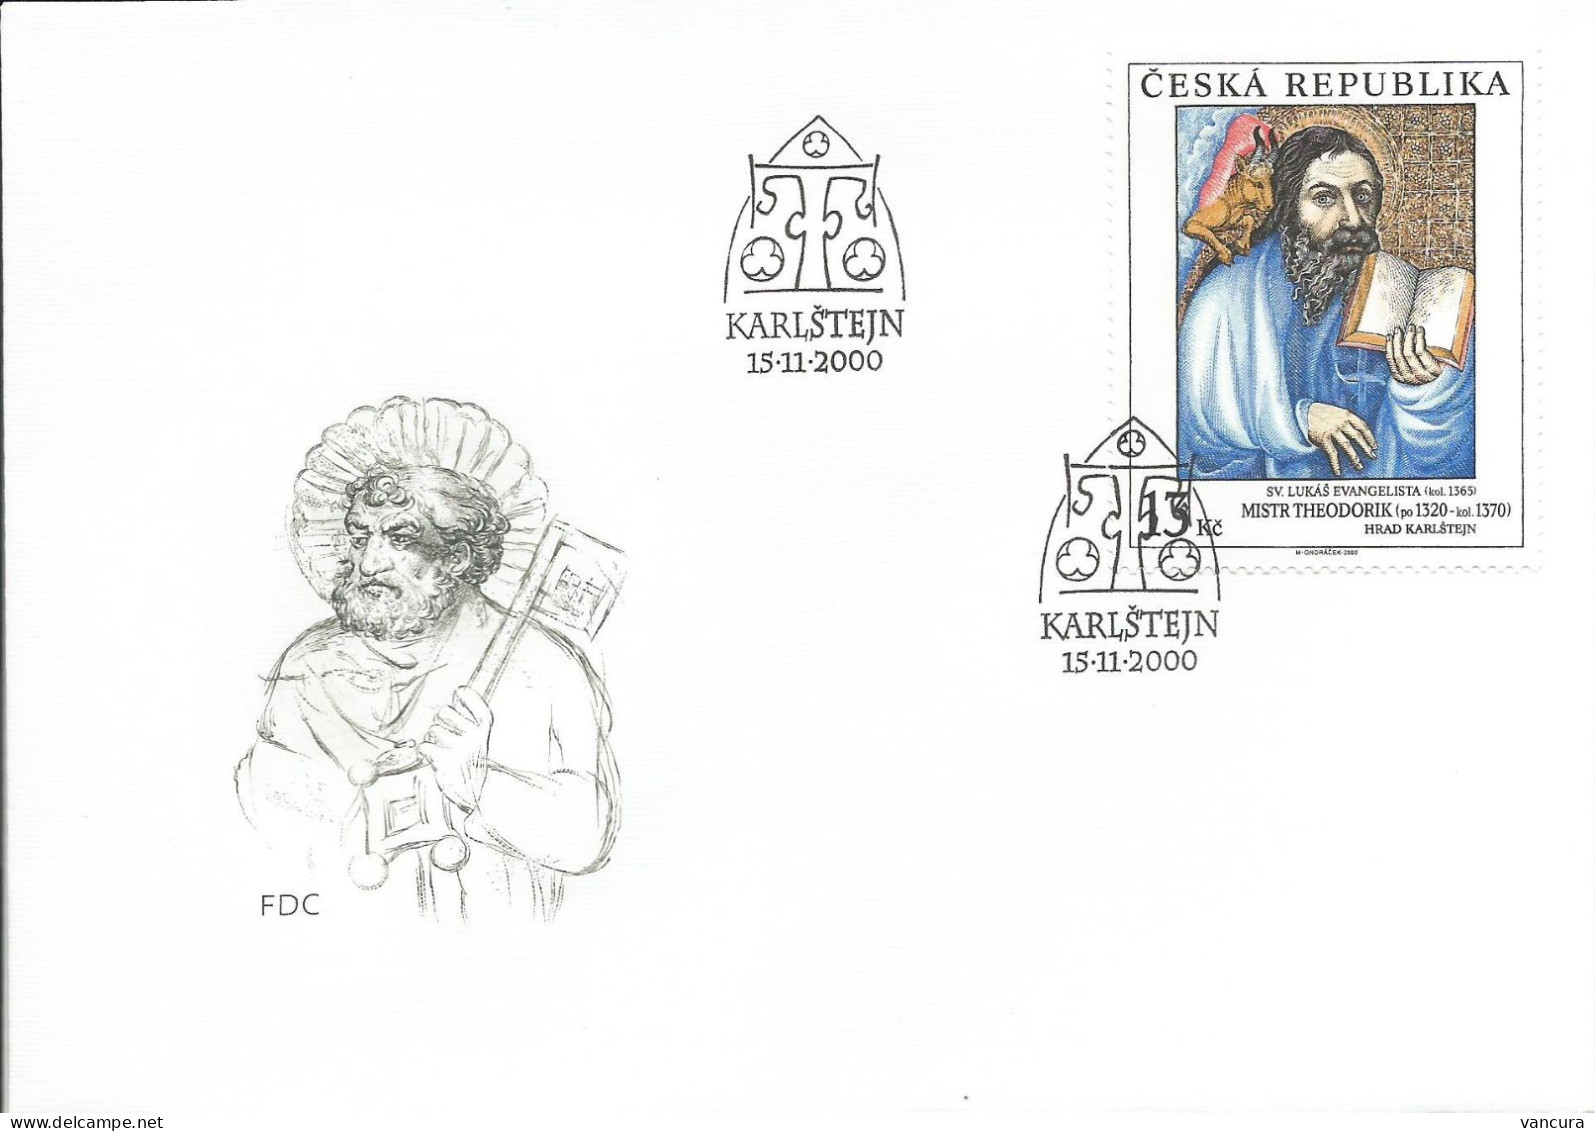 FDC 275 Czech Republic Master Theodorik, St Lucas, The Evangelist 2000 - Religious